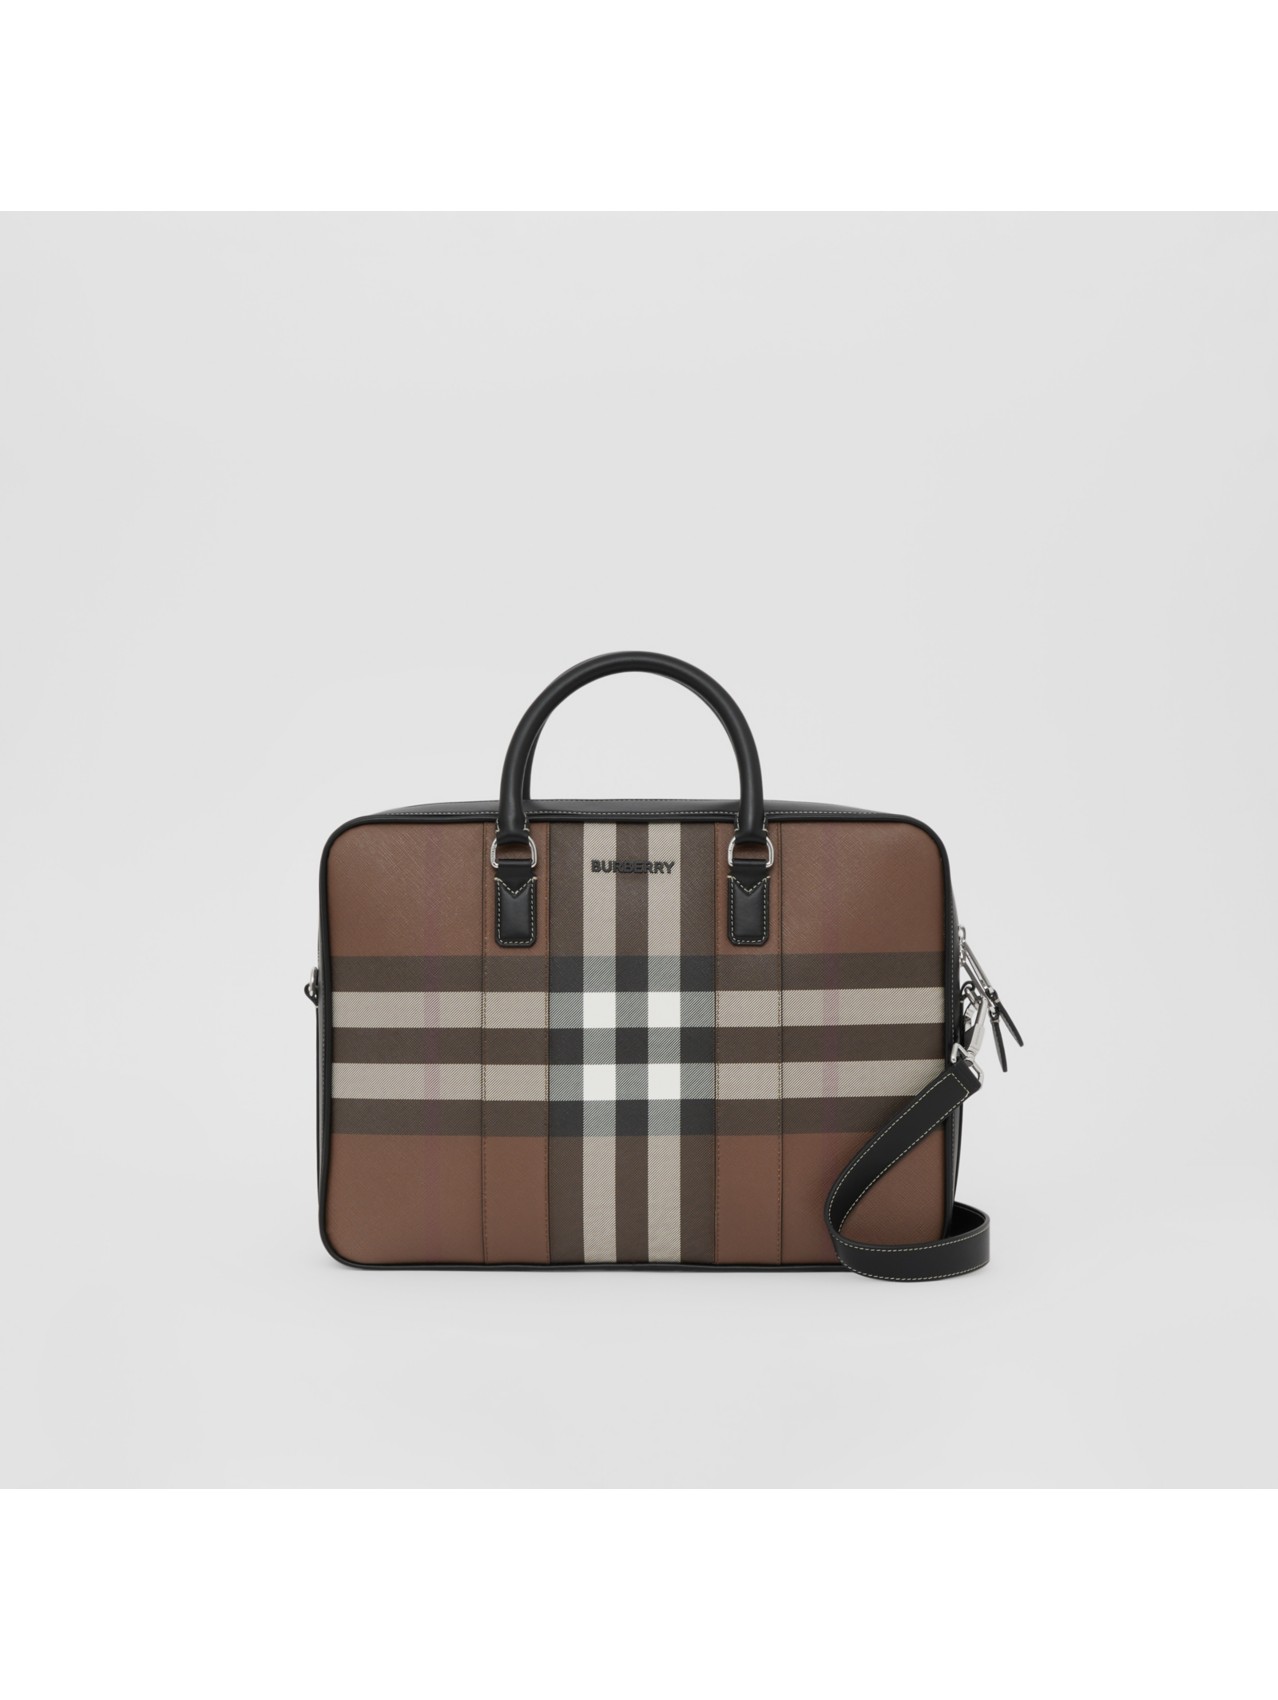 Designer Handbags | Luxury Bag Collection | Burberry®️ Official